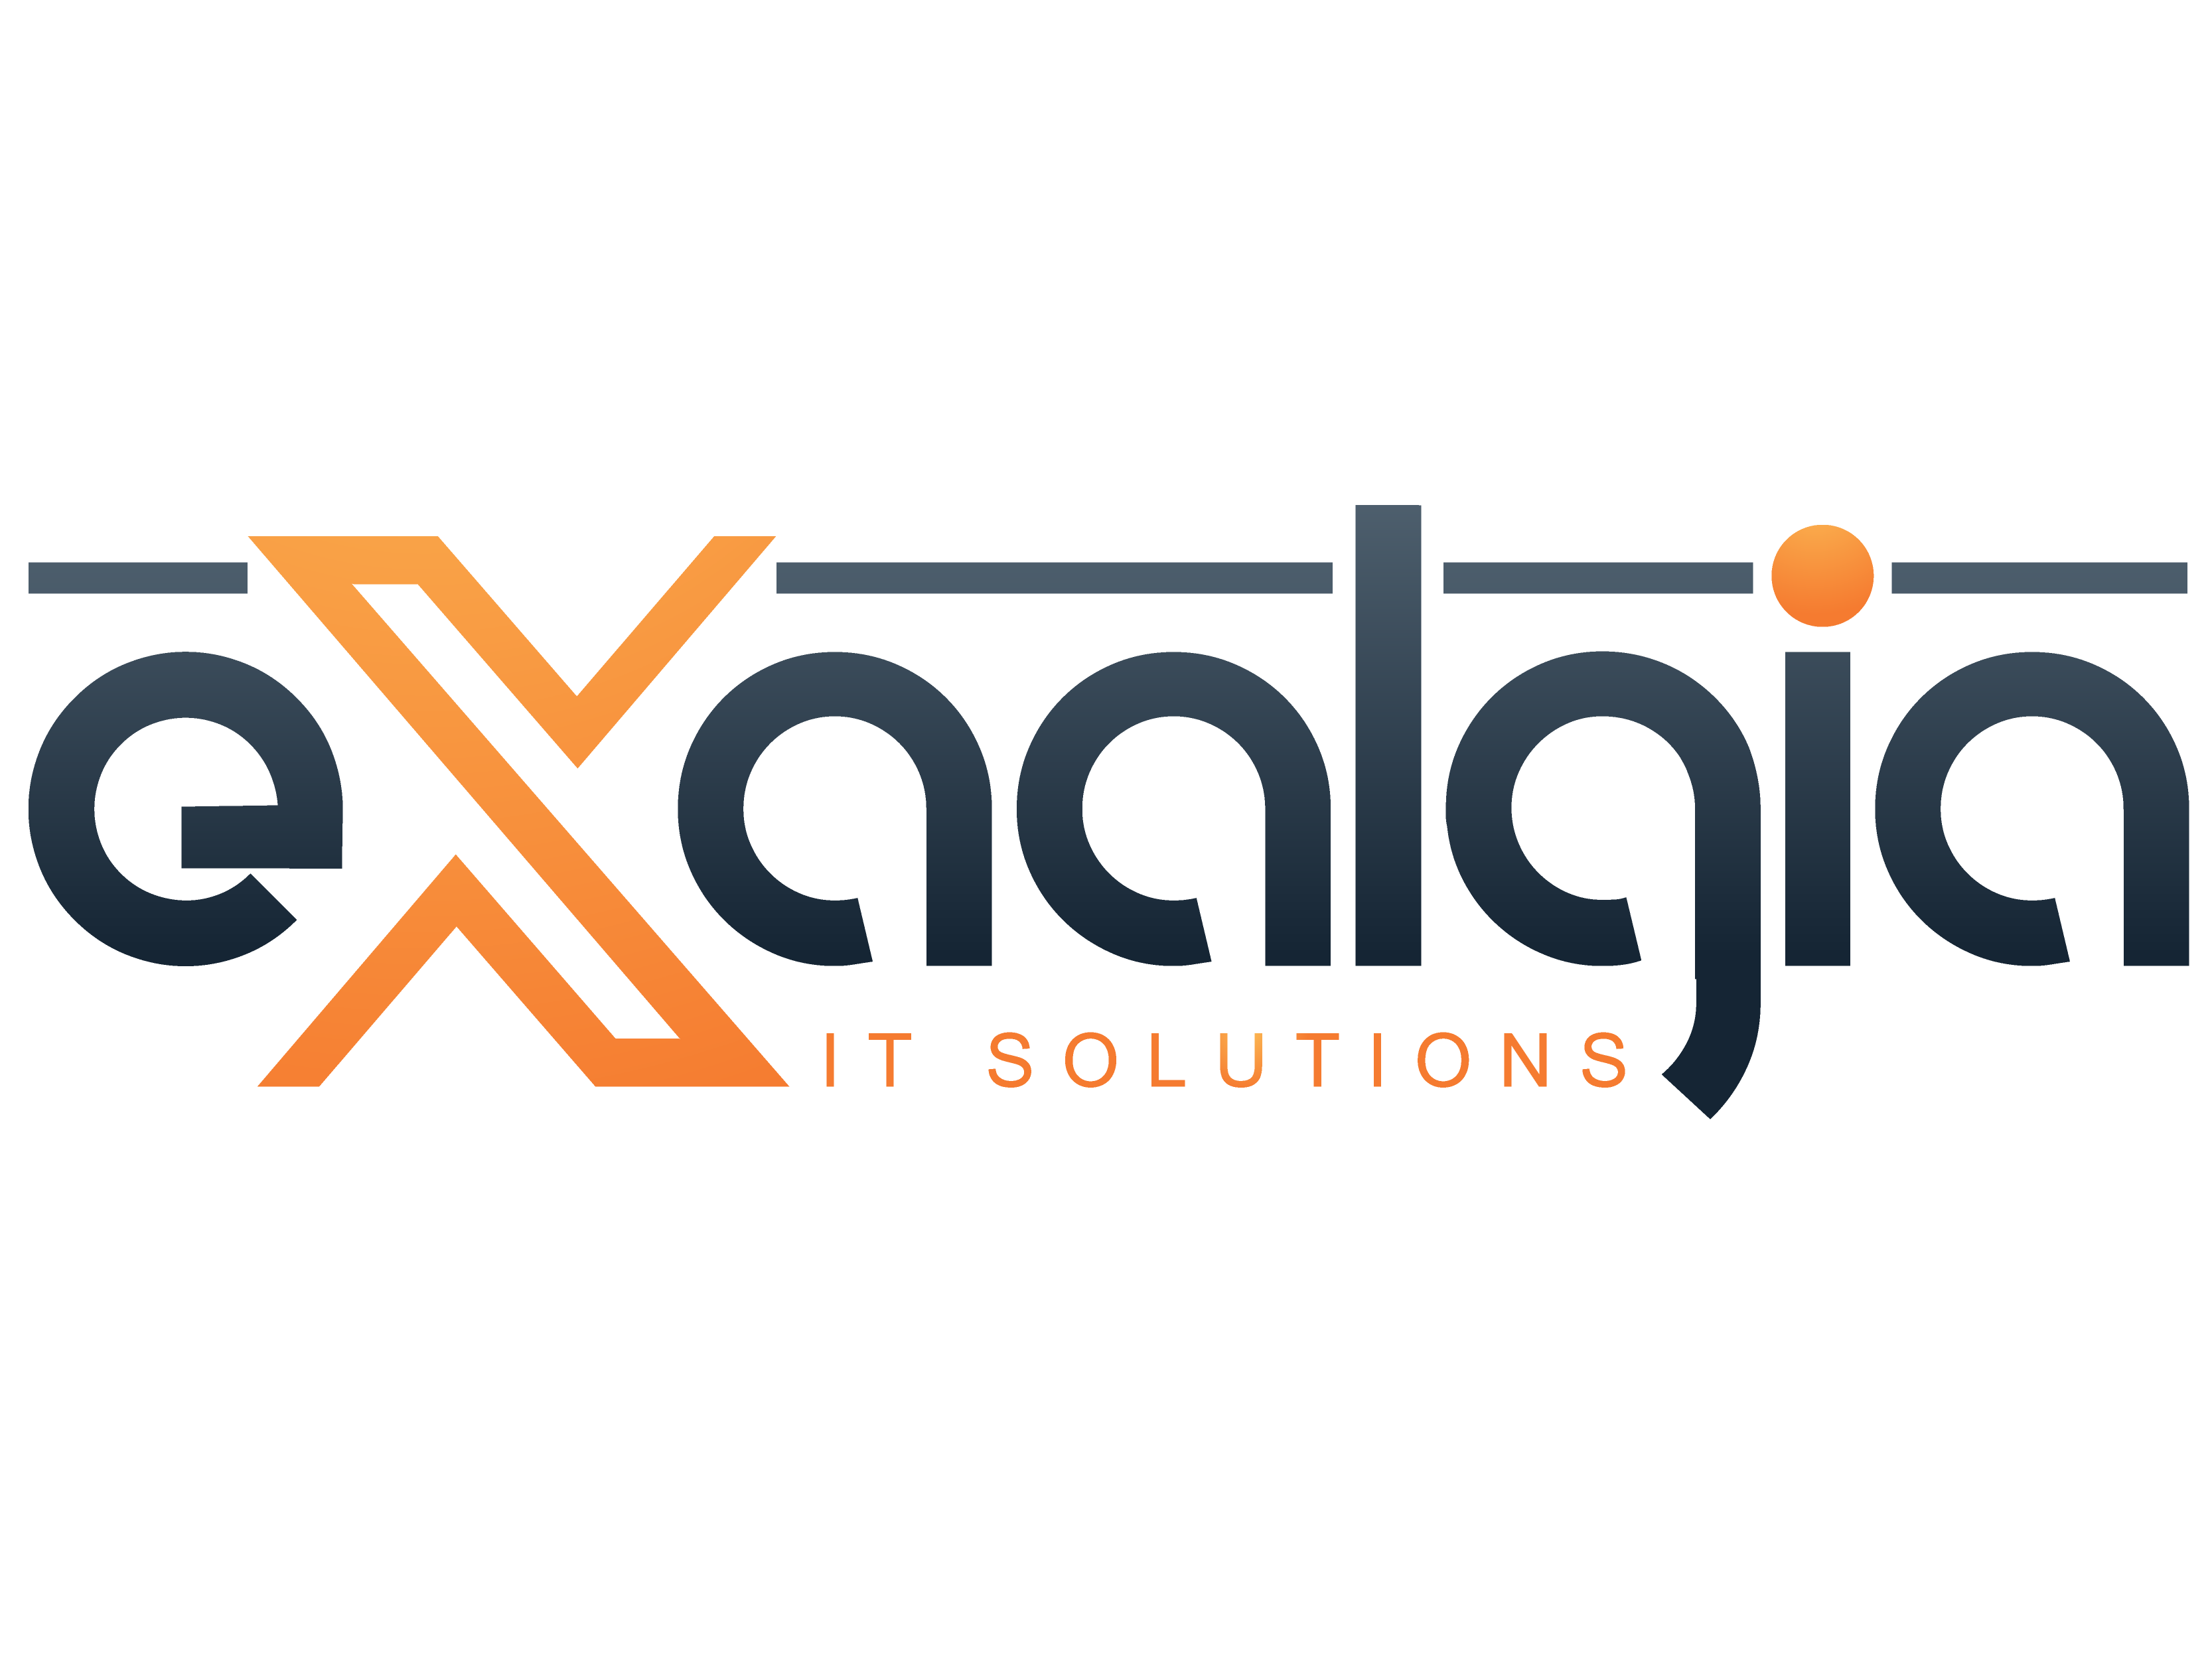 Best Online Marketing Business Logo: Exaalgia